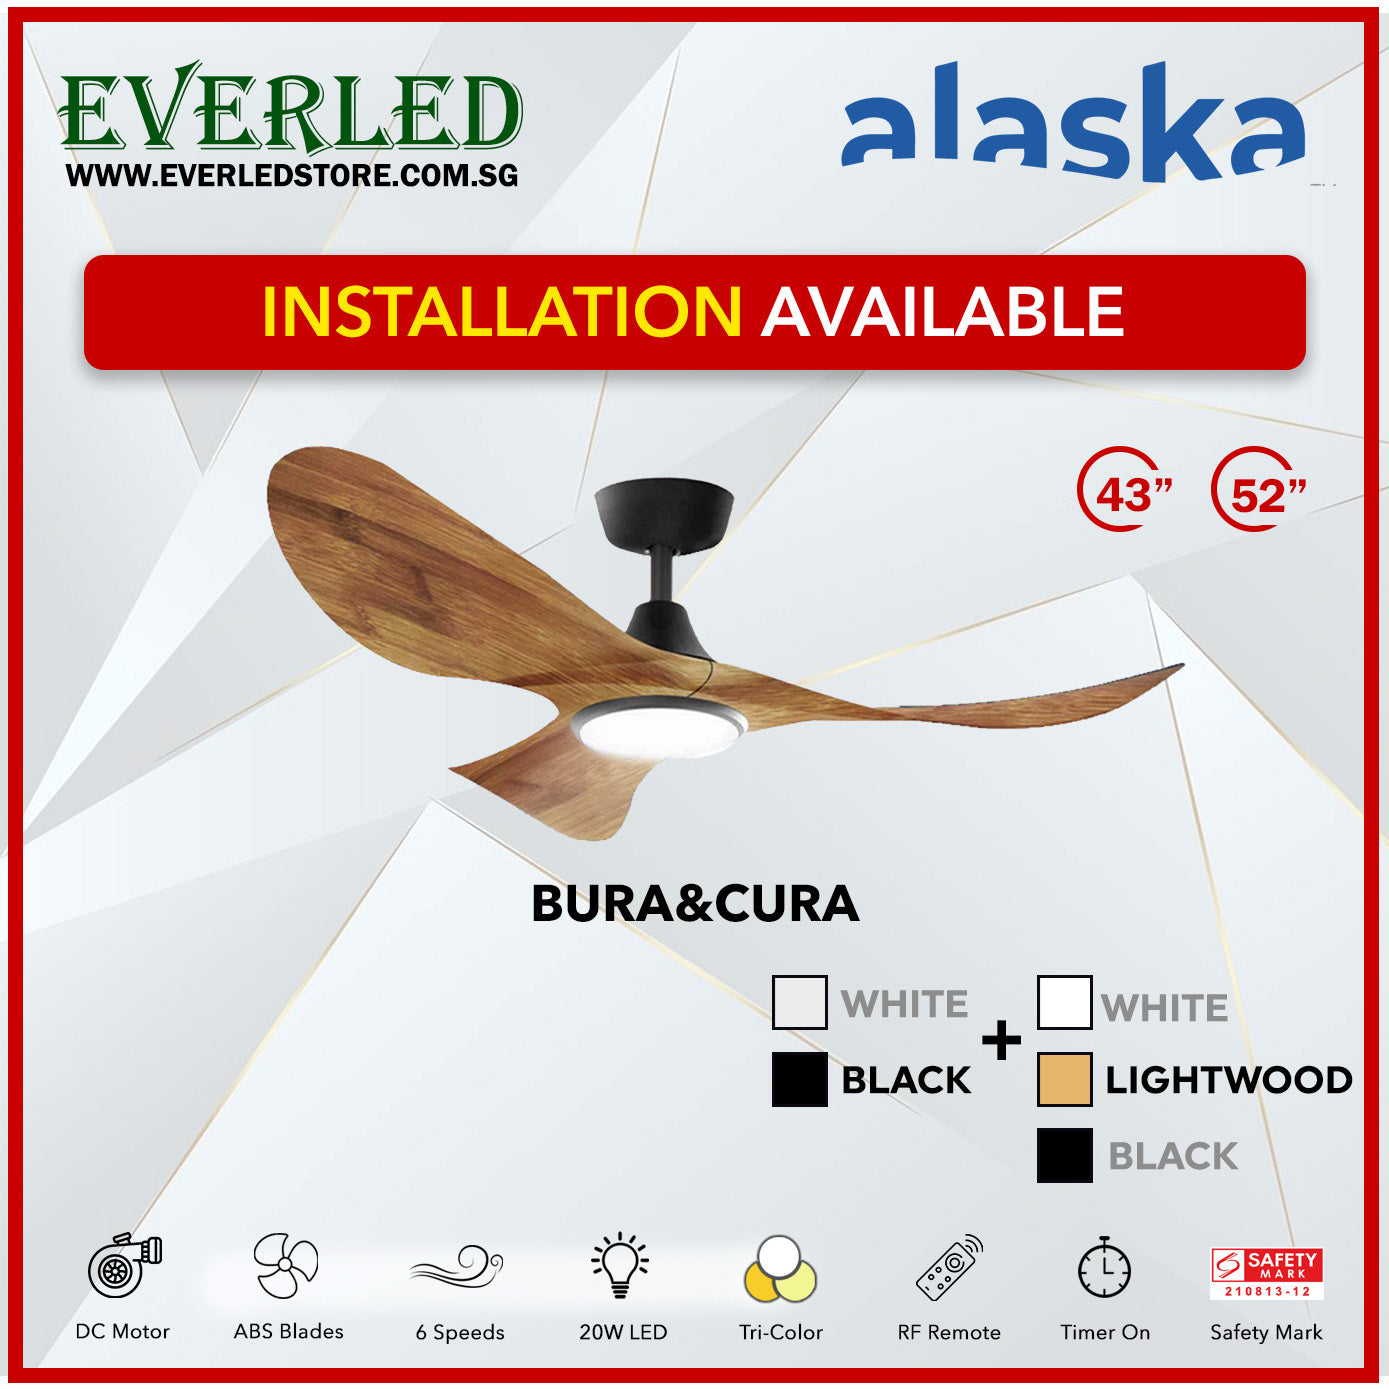 Alaska SMART DC Cura / Curah 52" (Inverter DC Fan) with Samsung dimmable light kit